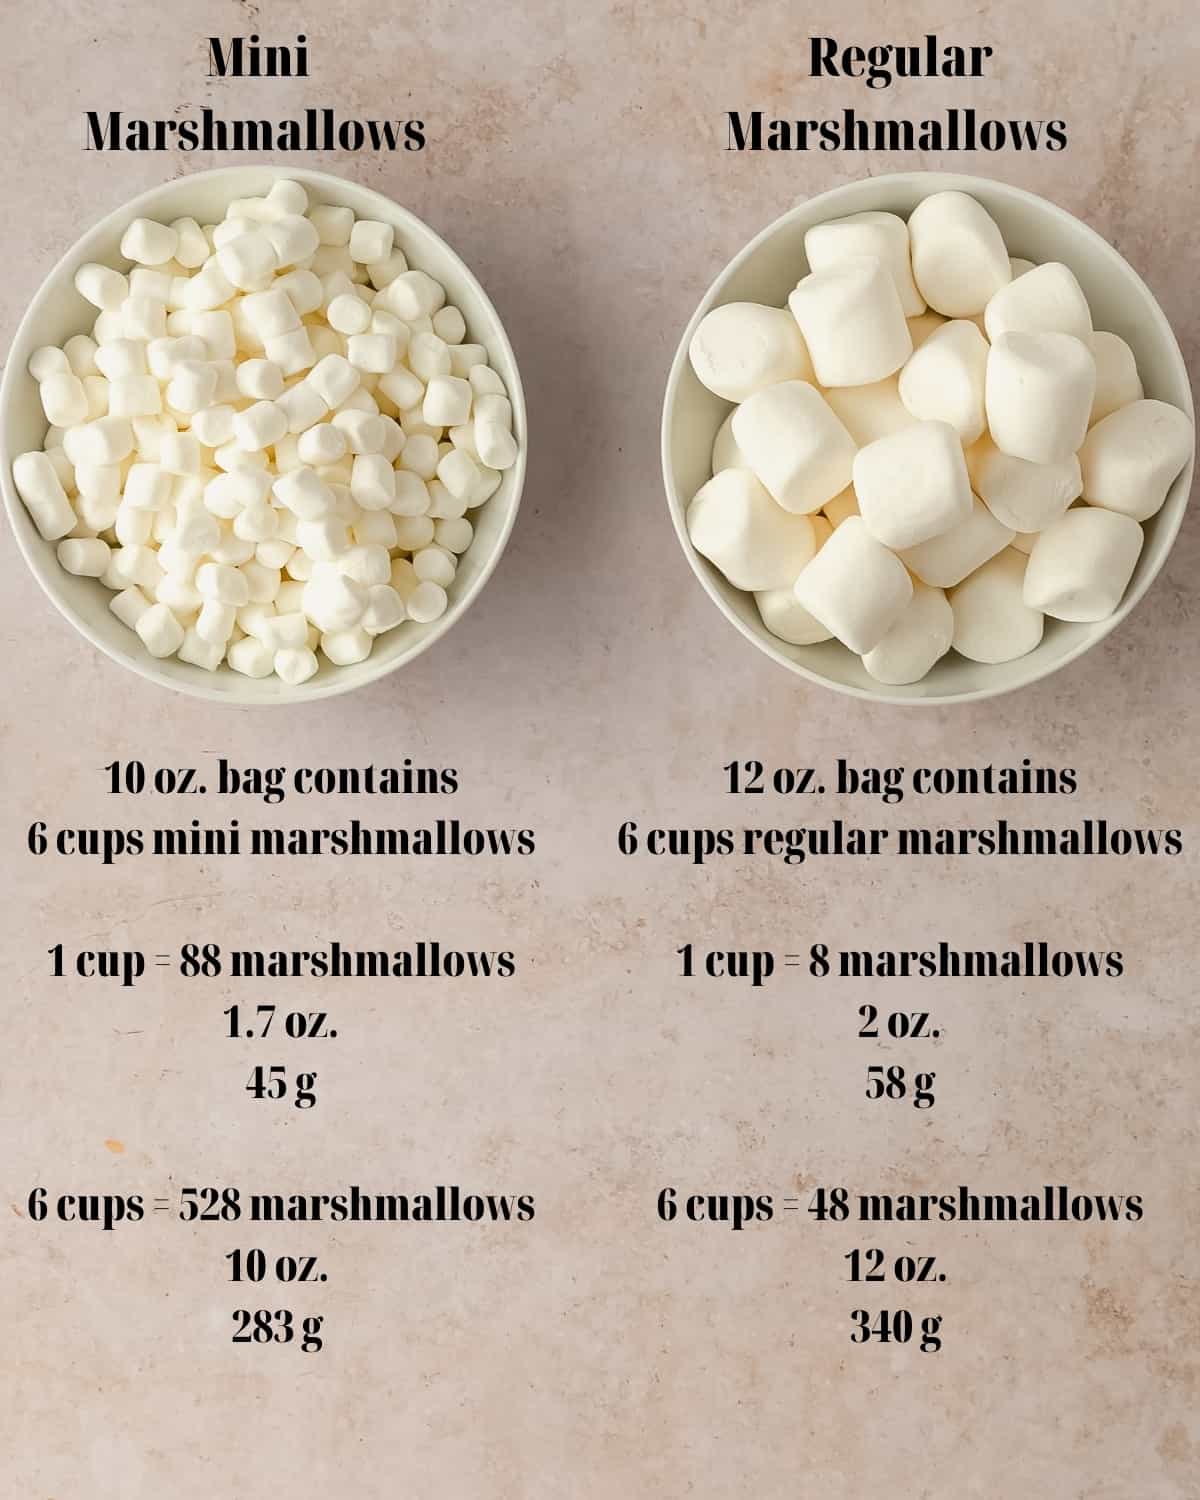 Comparing mini marshmallows to regular marshmallows